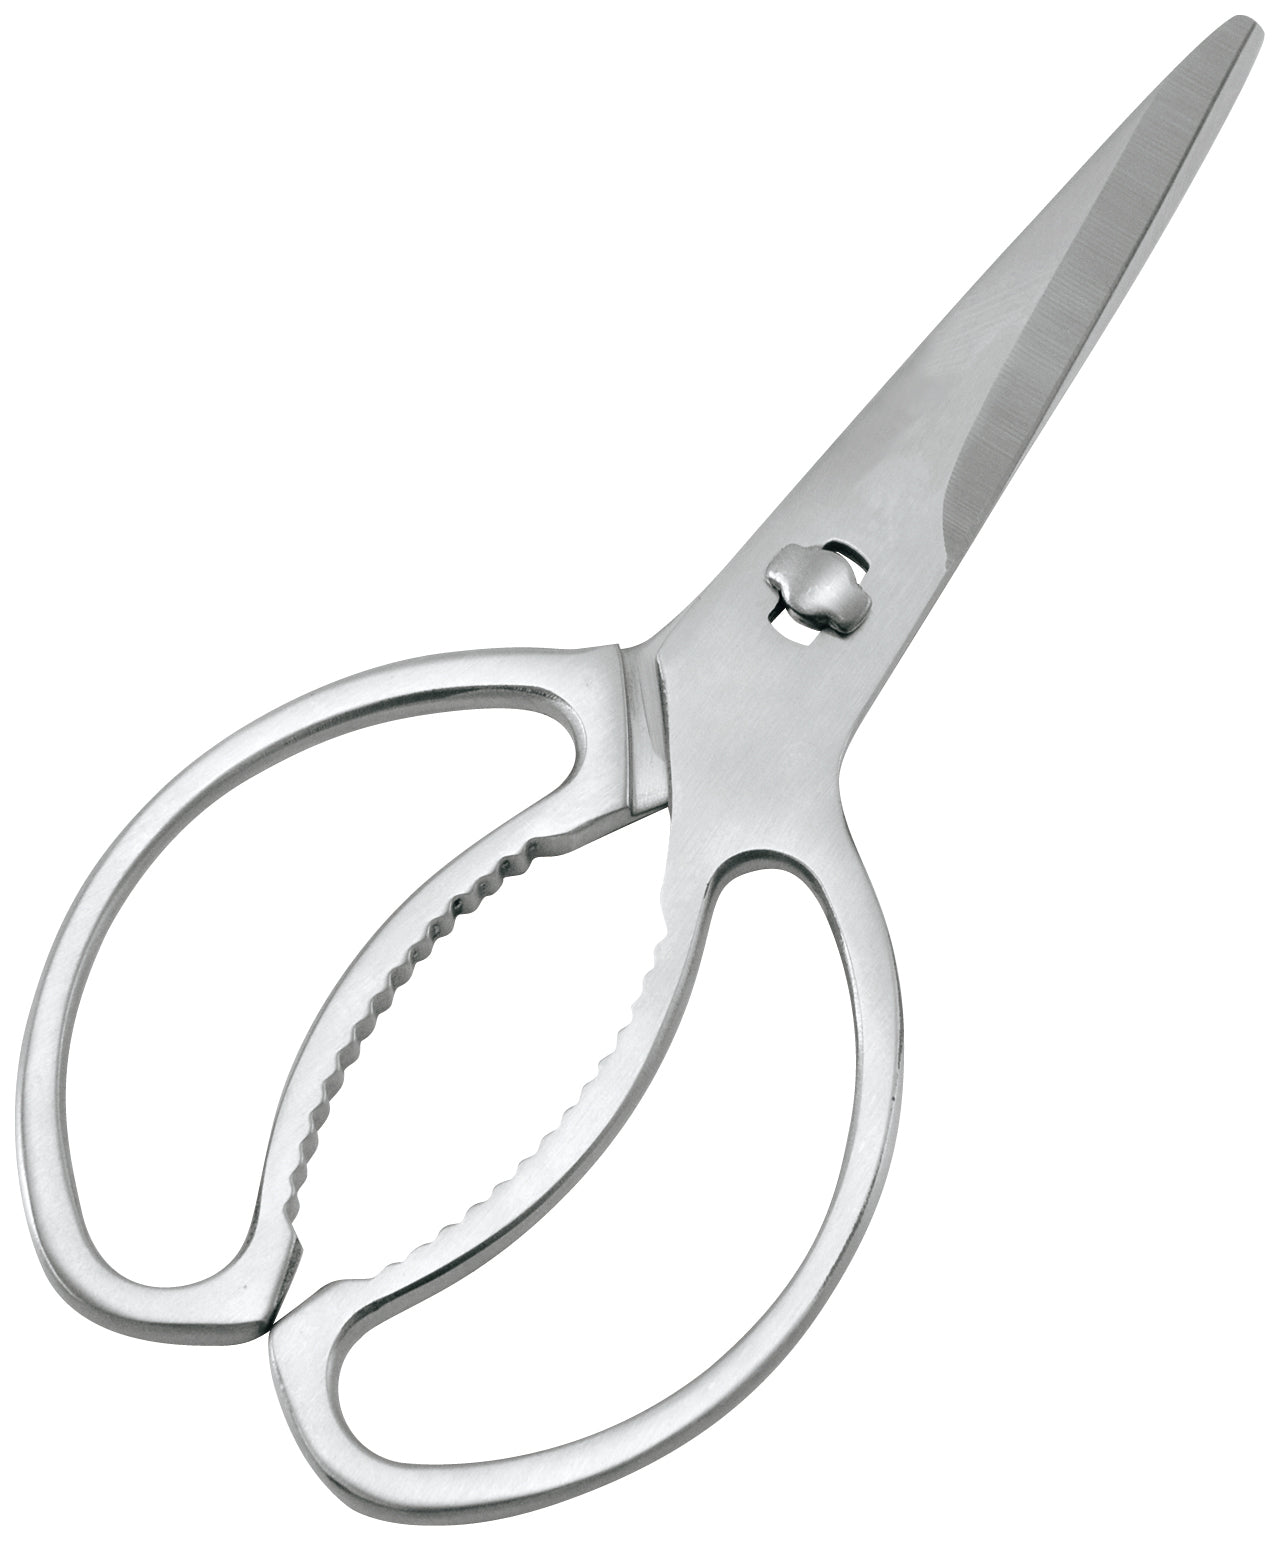 EBM All Stainless-Steel Kitchen Scissors